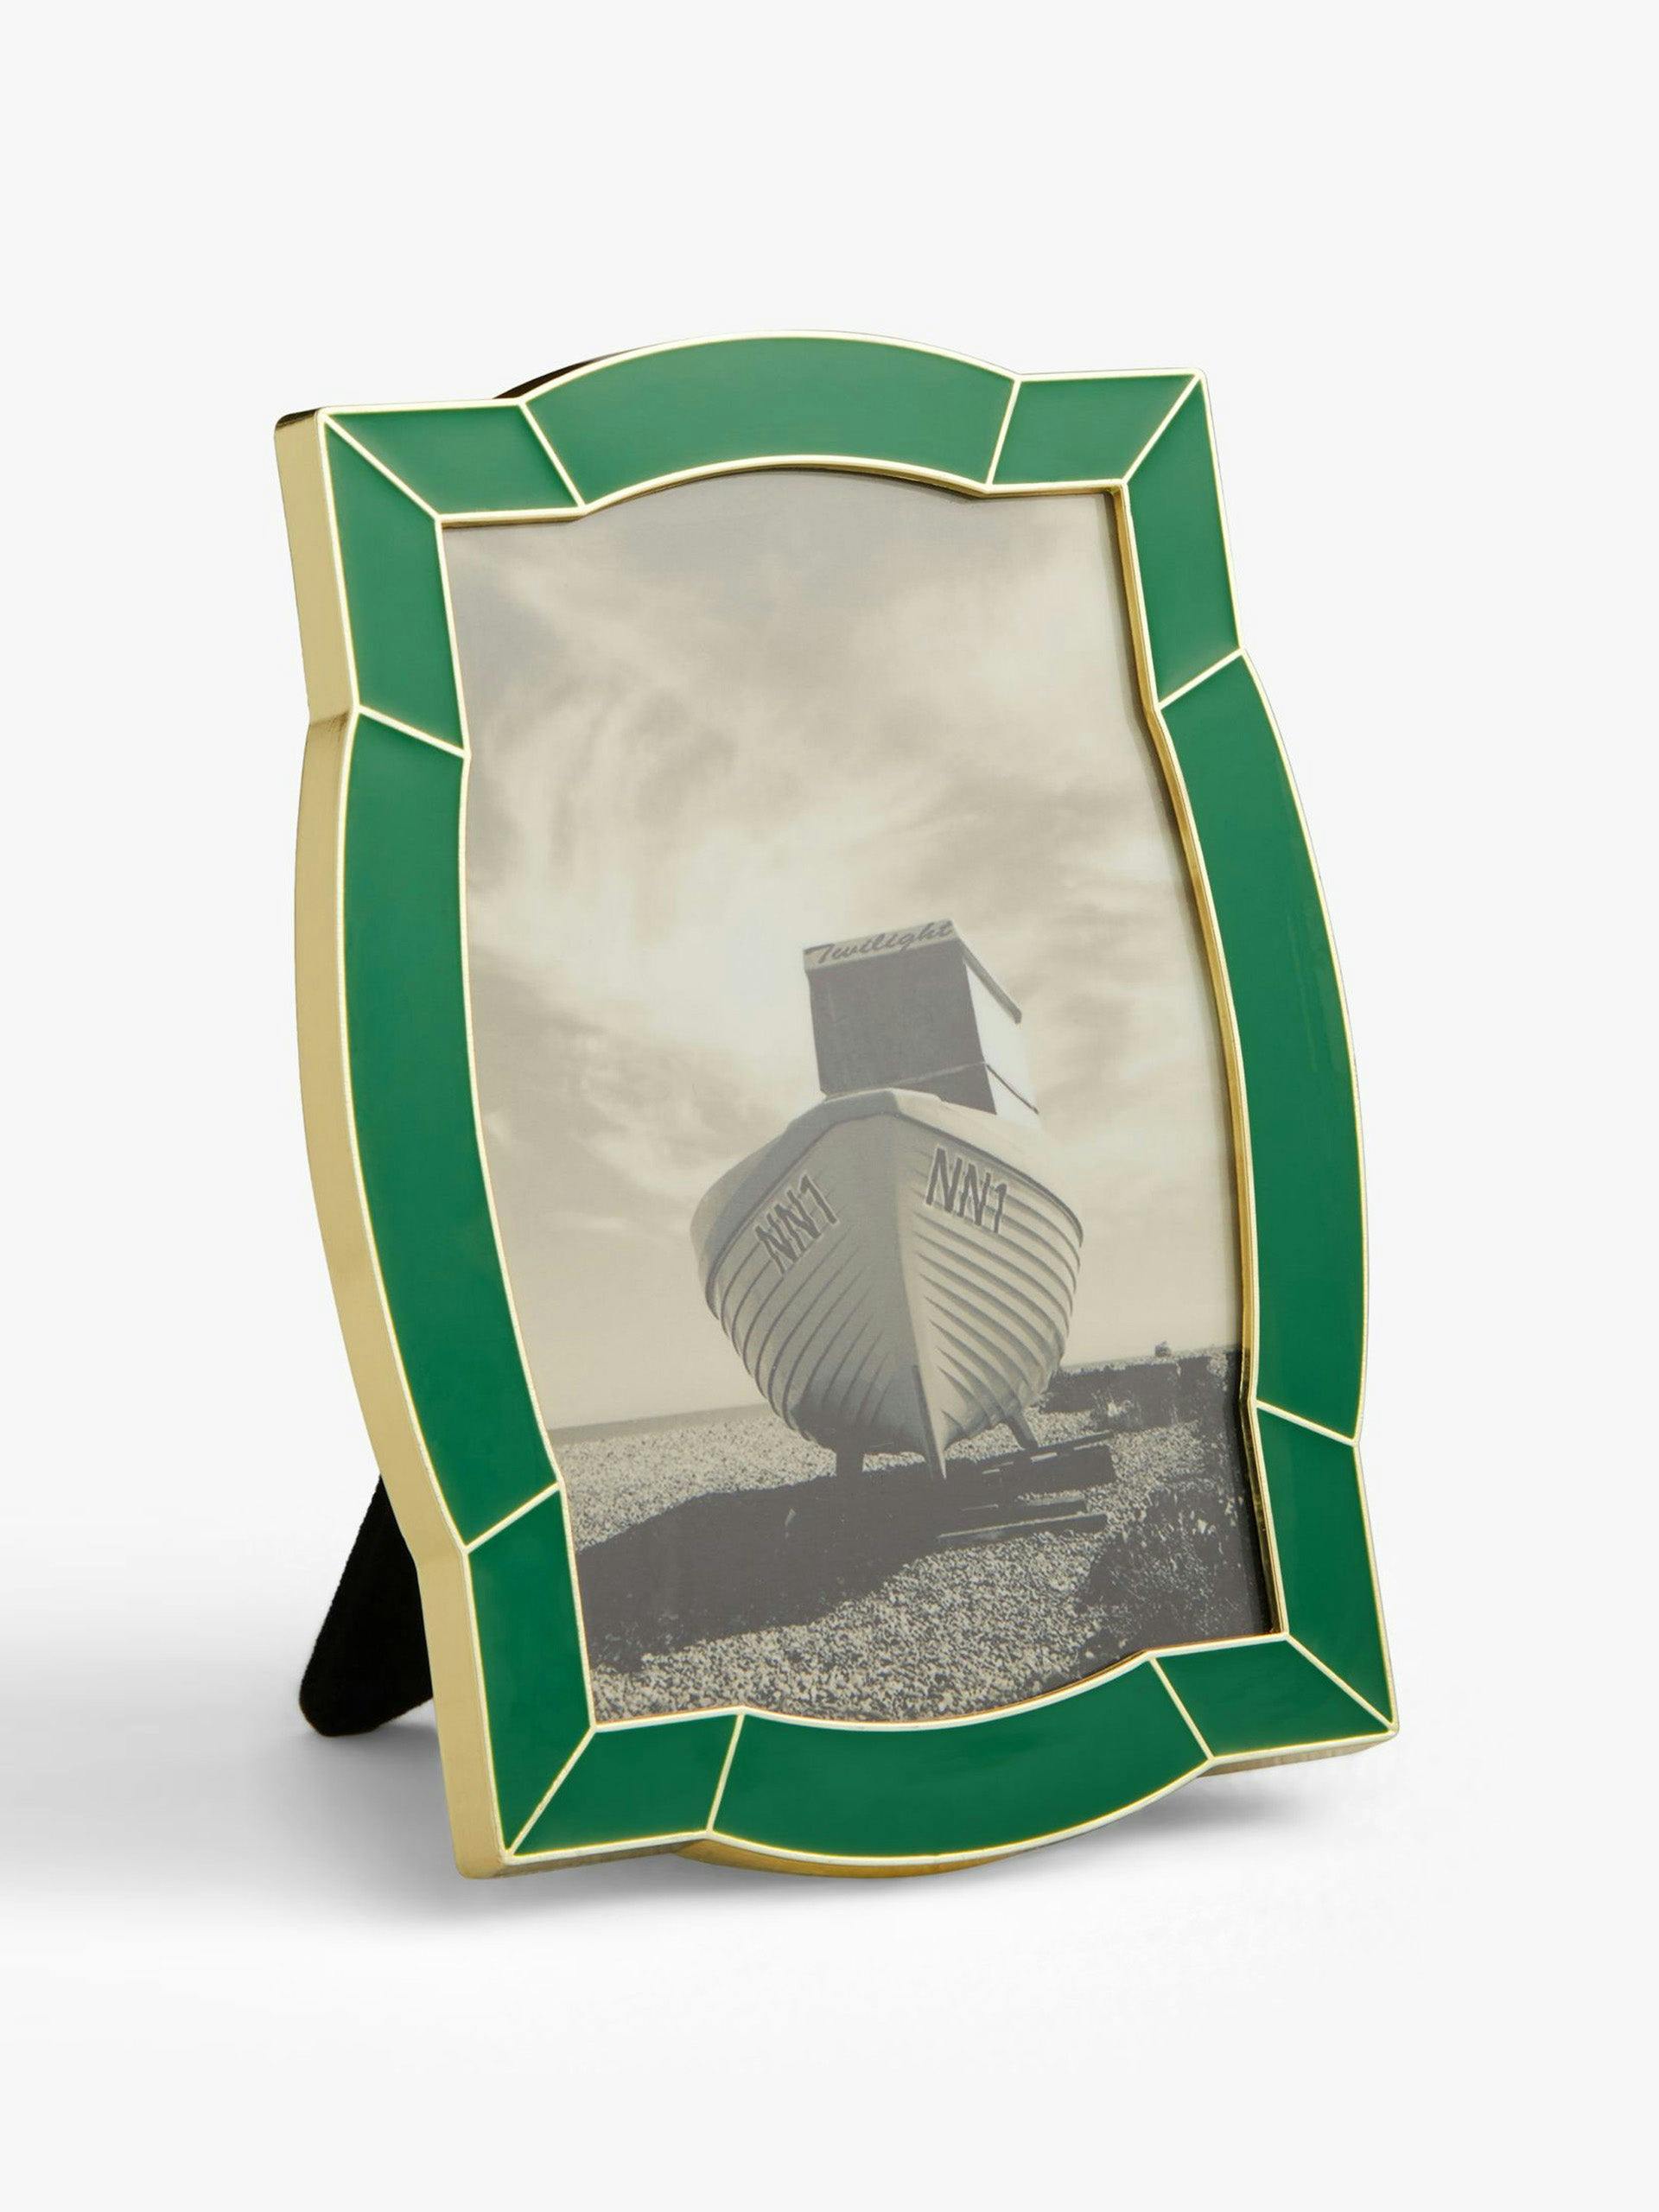 Green enamel photo frame with gold edge